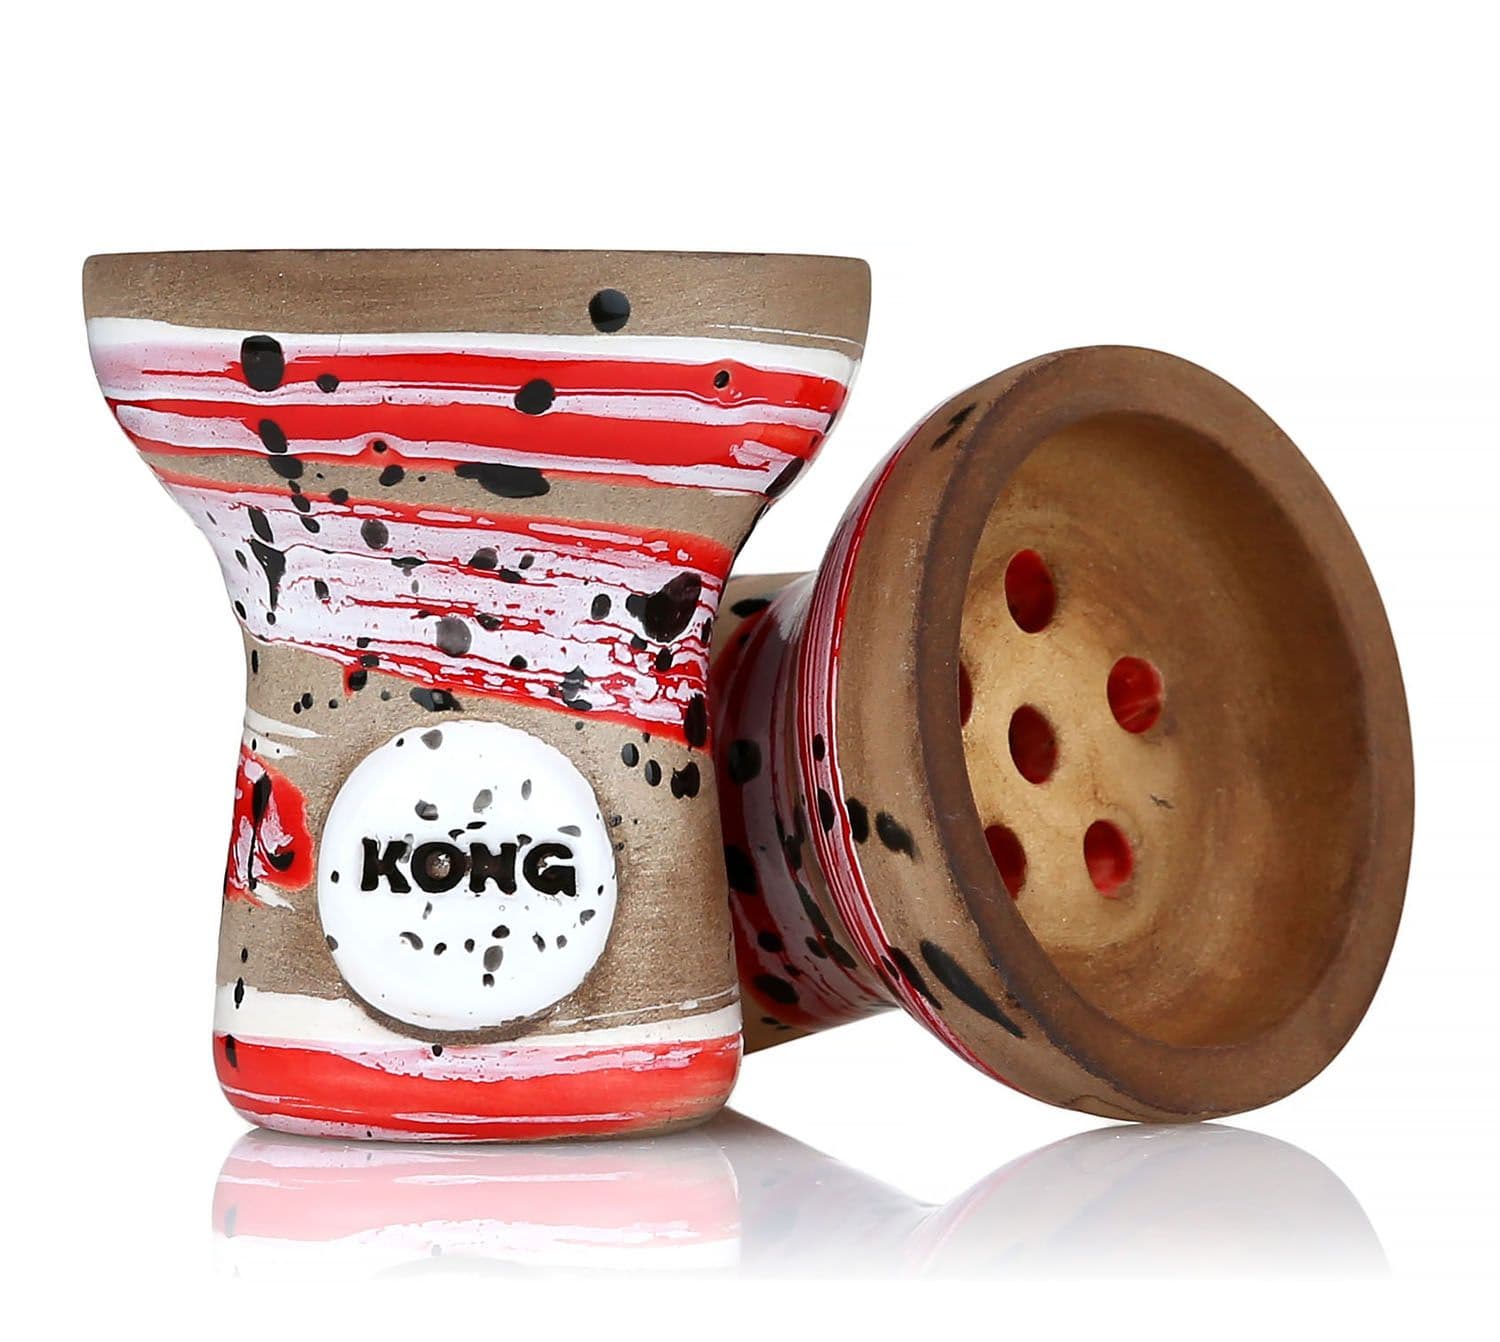 Kong Turkish Boy Space Glazed Bowl -  Red